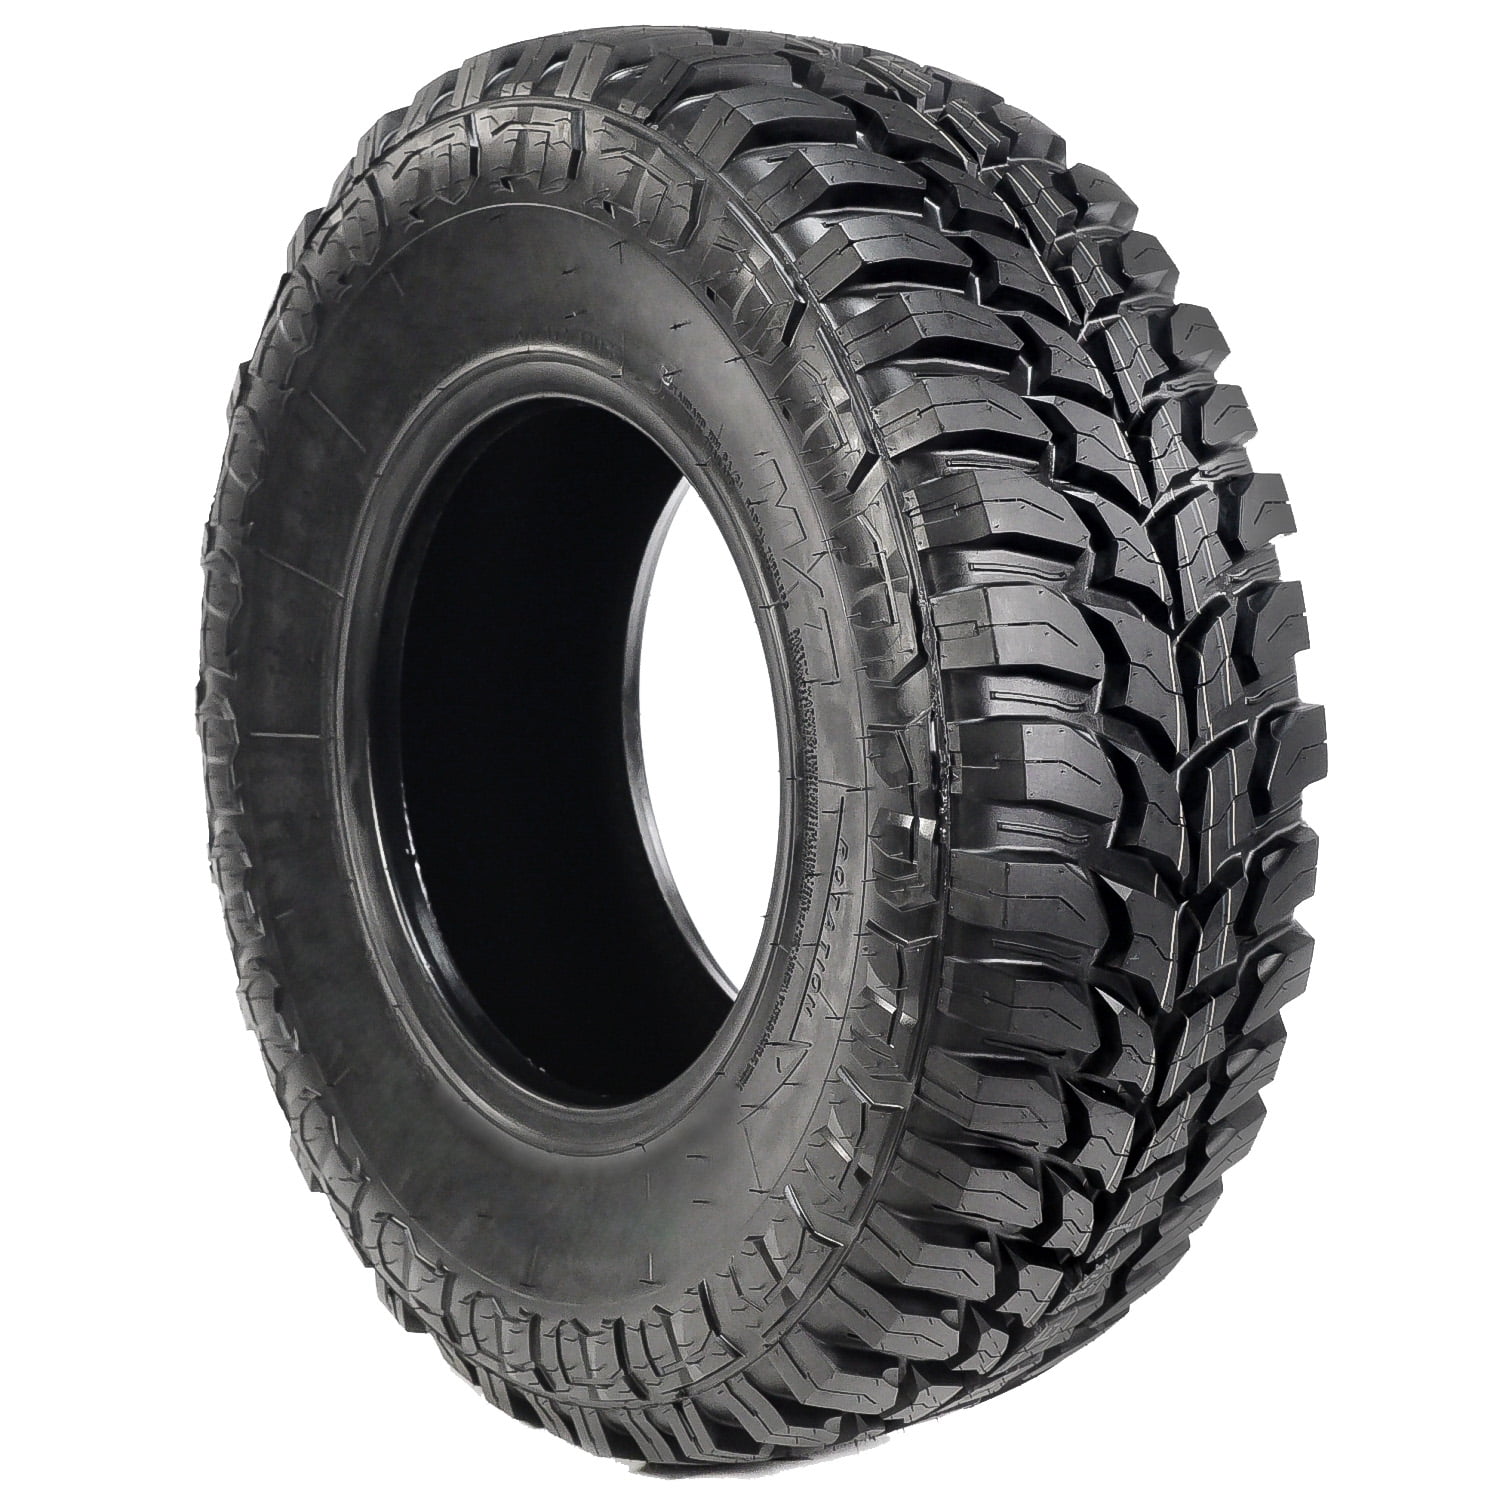 Mud Tire Mt Tire 35x12.50r20,33*12.5r20,33*12.50r18,265 